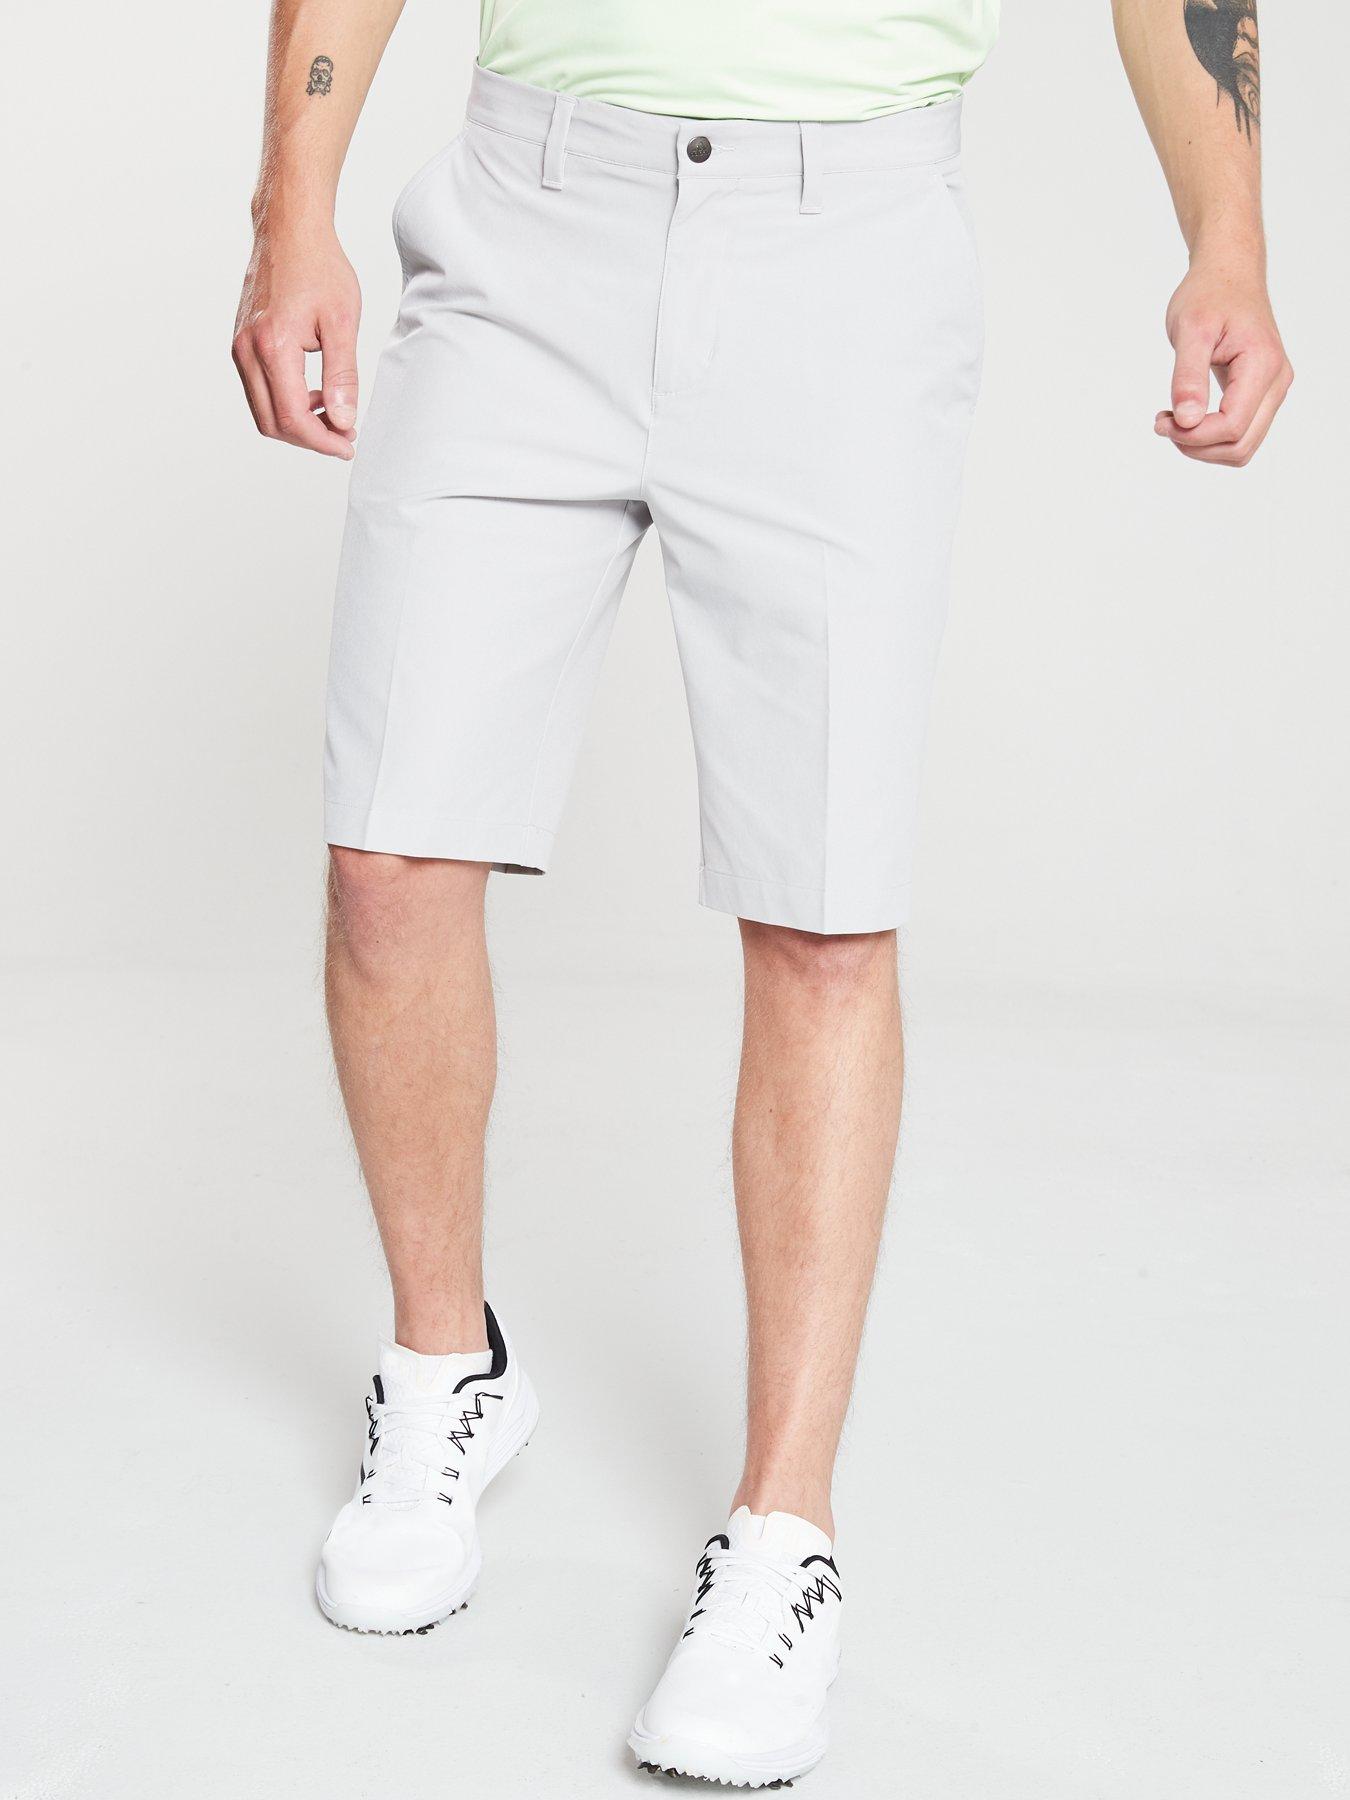 adidas golf shorts clearance